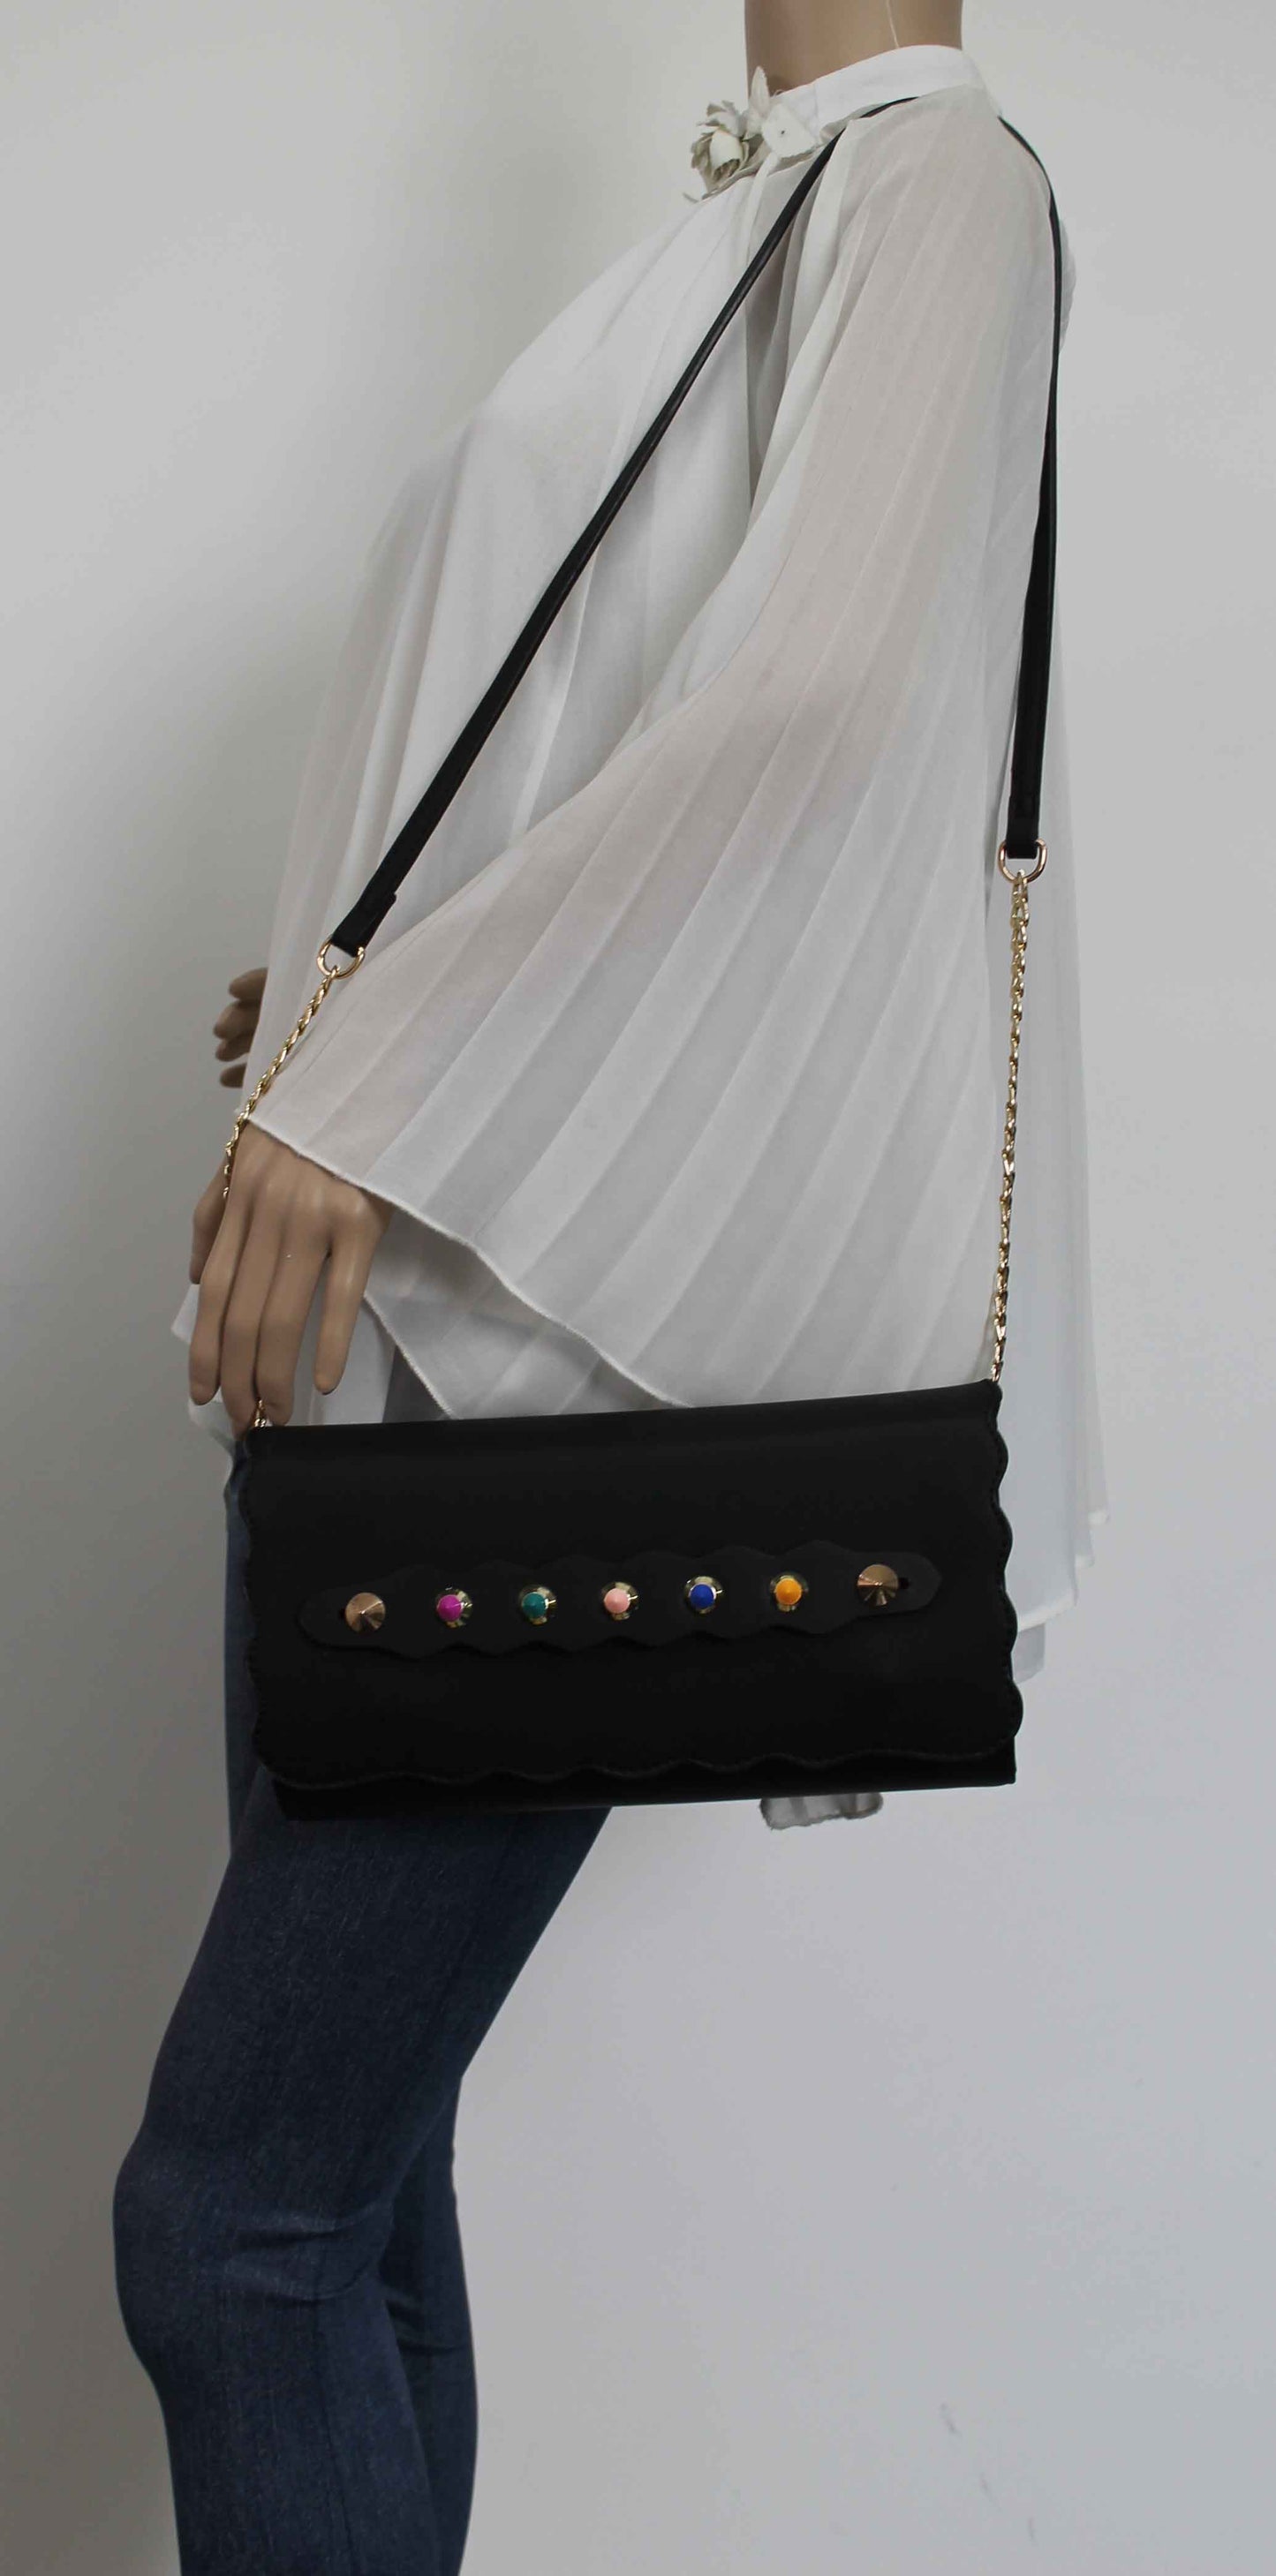 SWANKYSWANS Kira Clutch Bag Black Cute Cheap Clutch Bag For Weddings School and Work